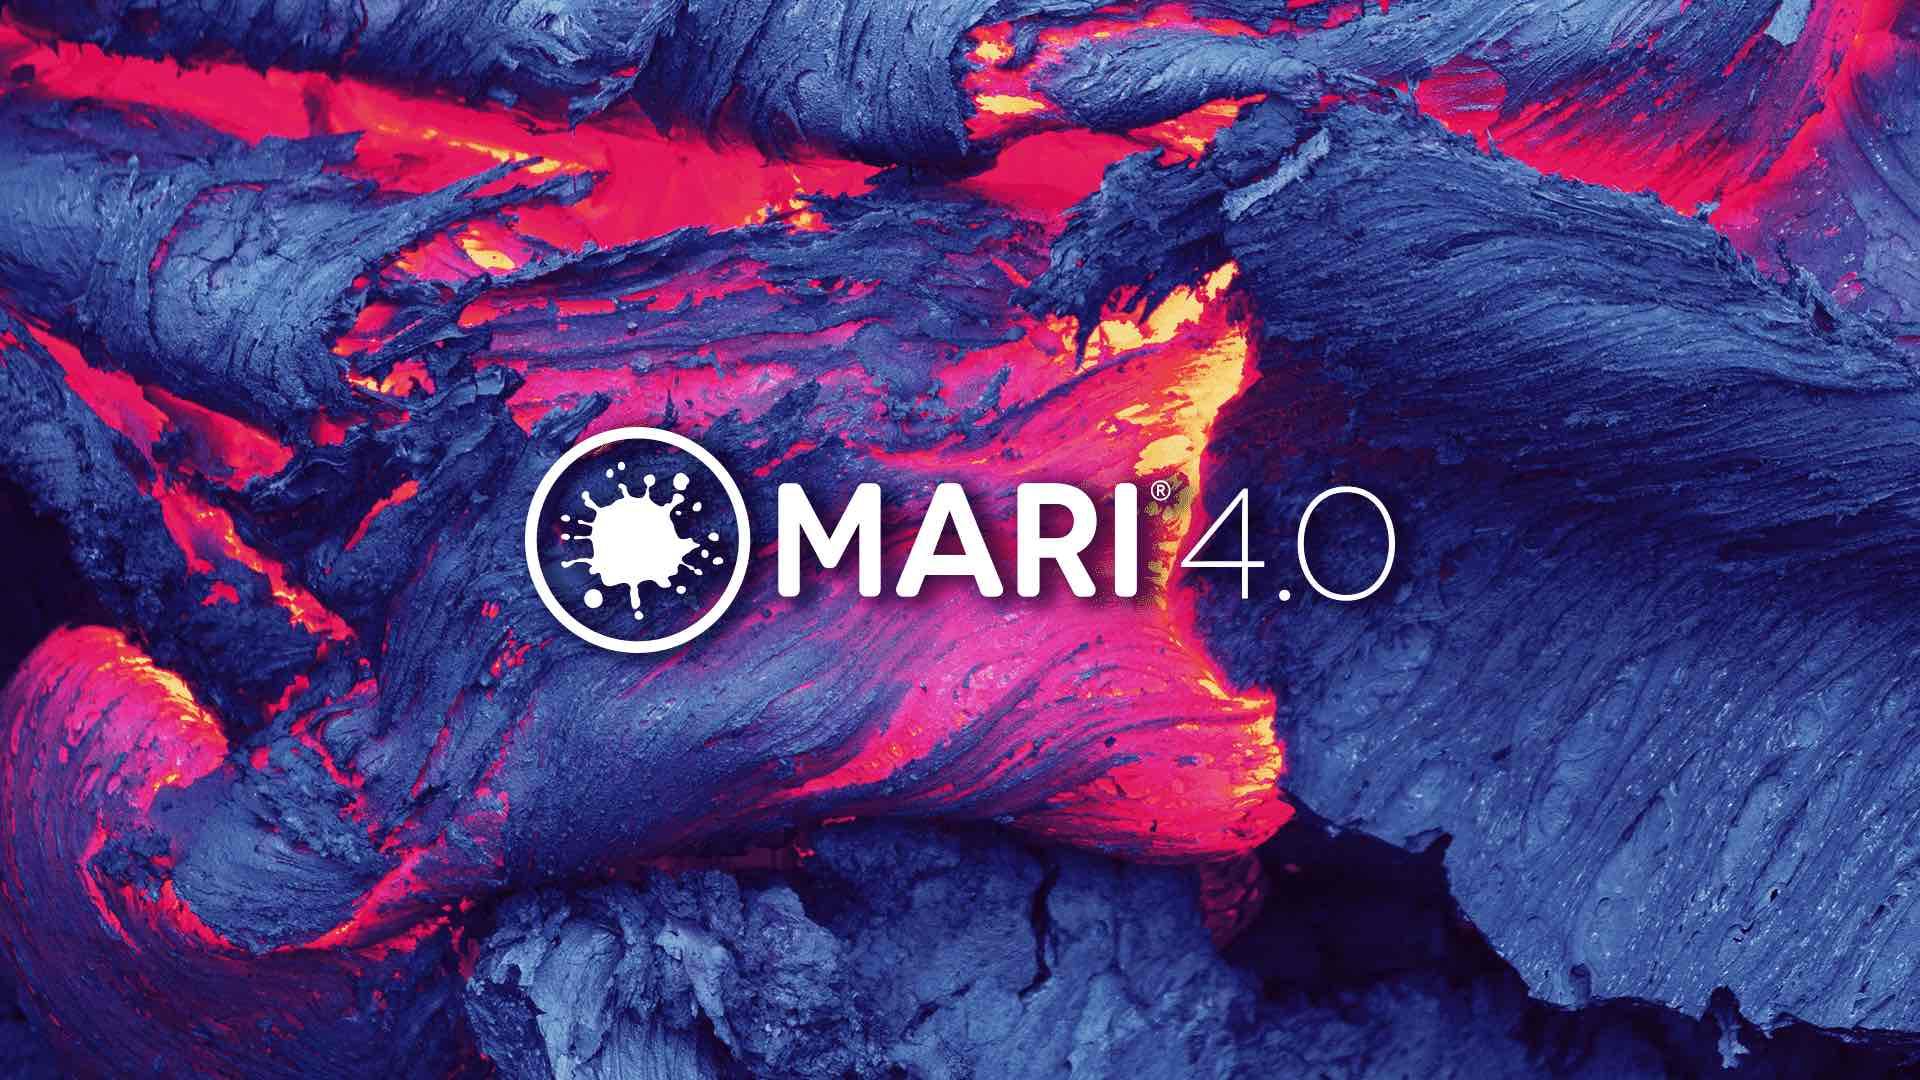 New Release Mari 4.0